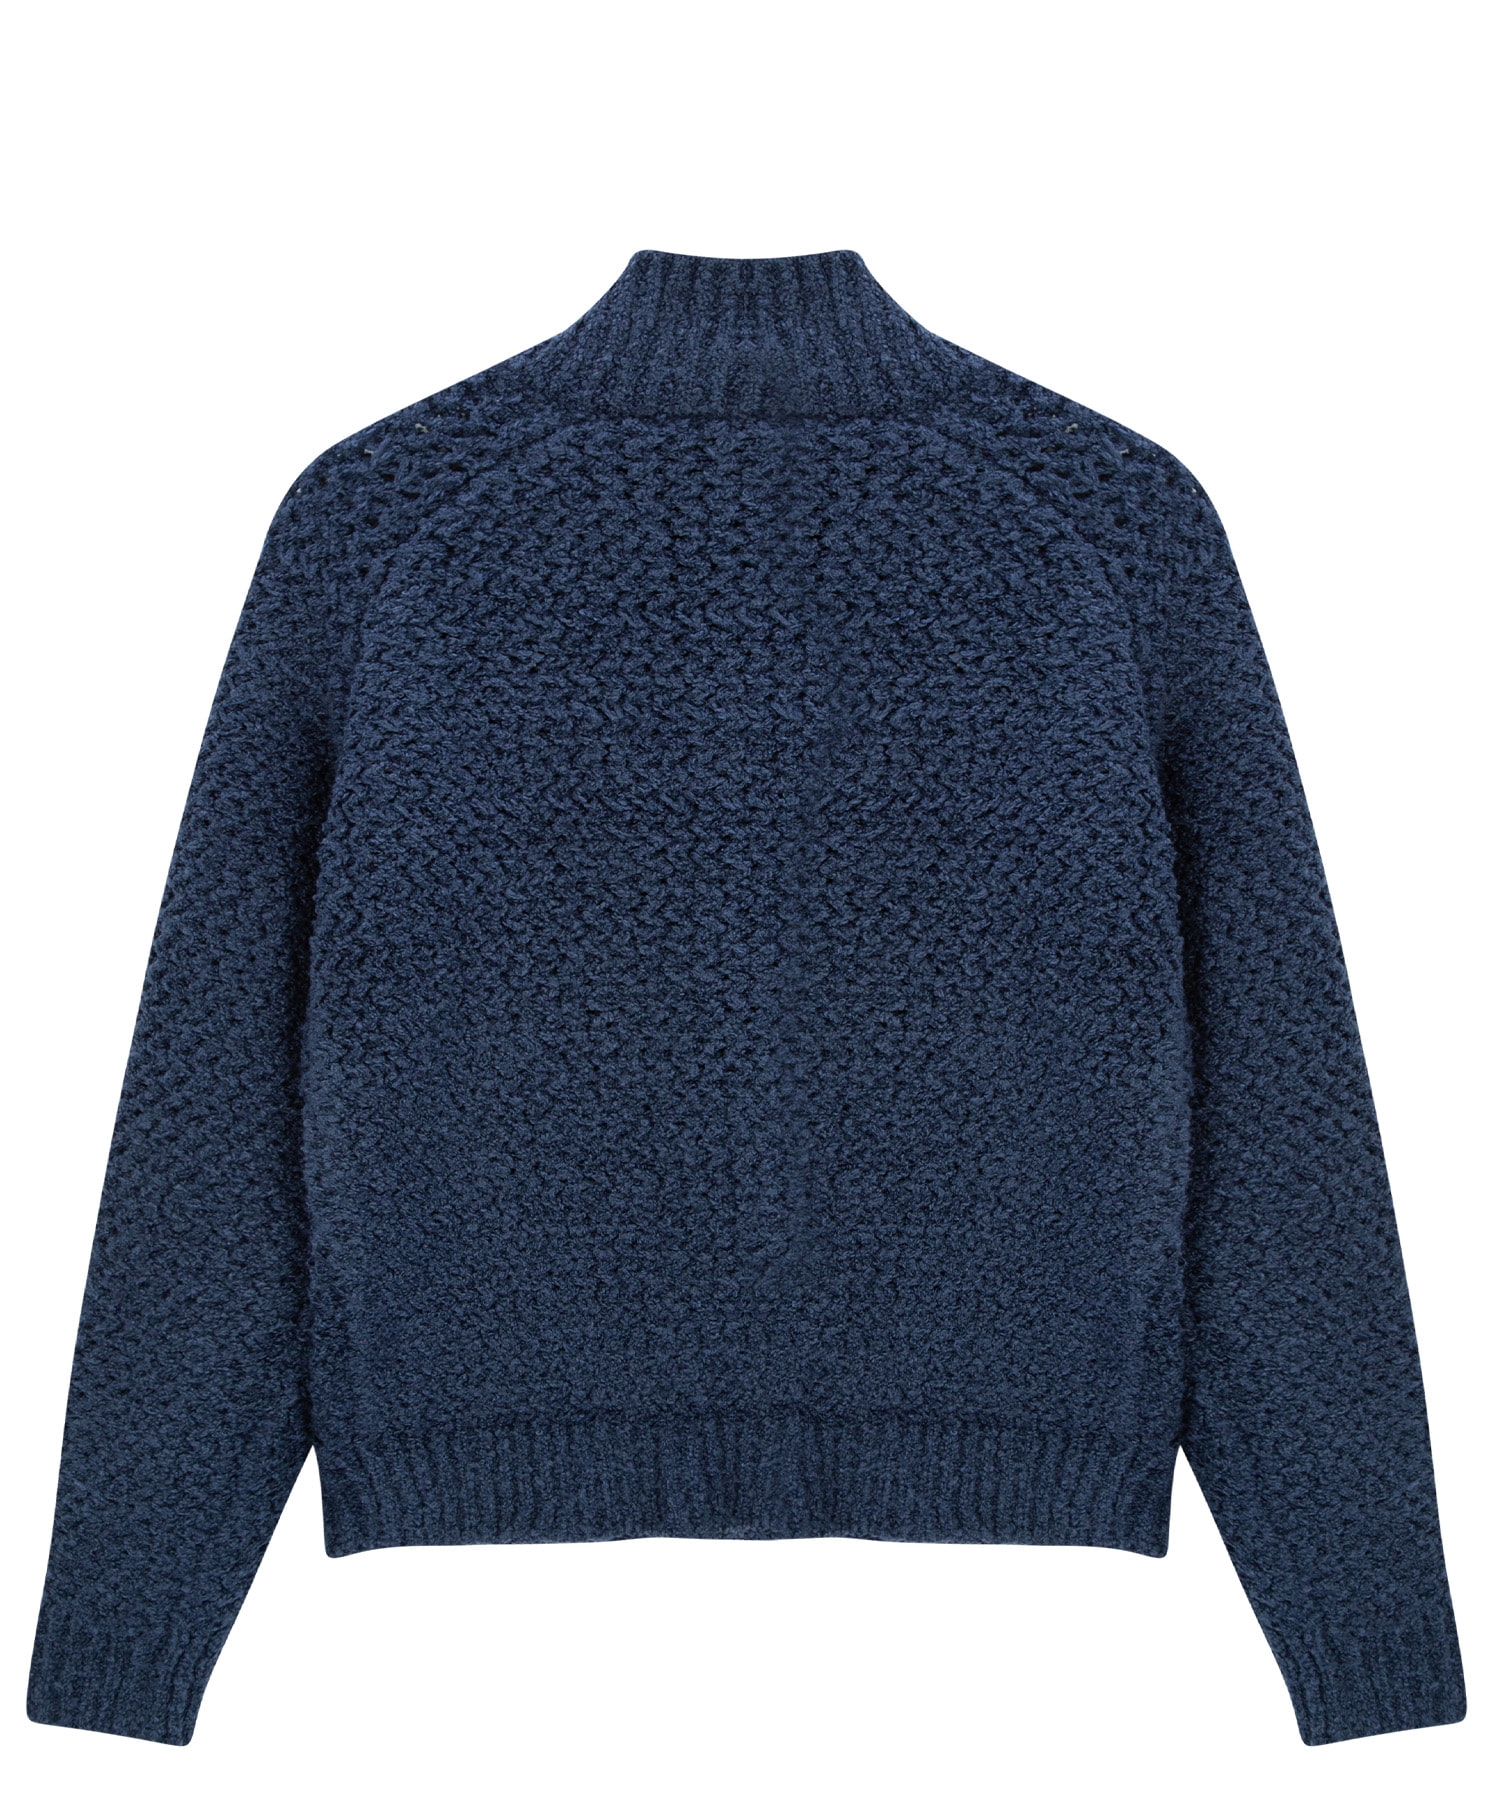 Wool Blend 2way Zipper Knit Cardigan - Navy